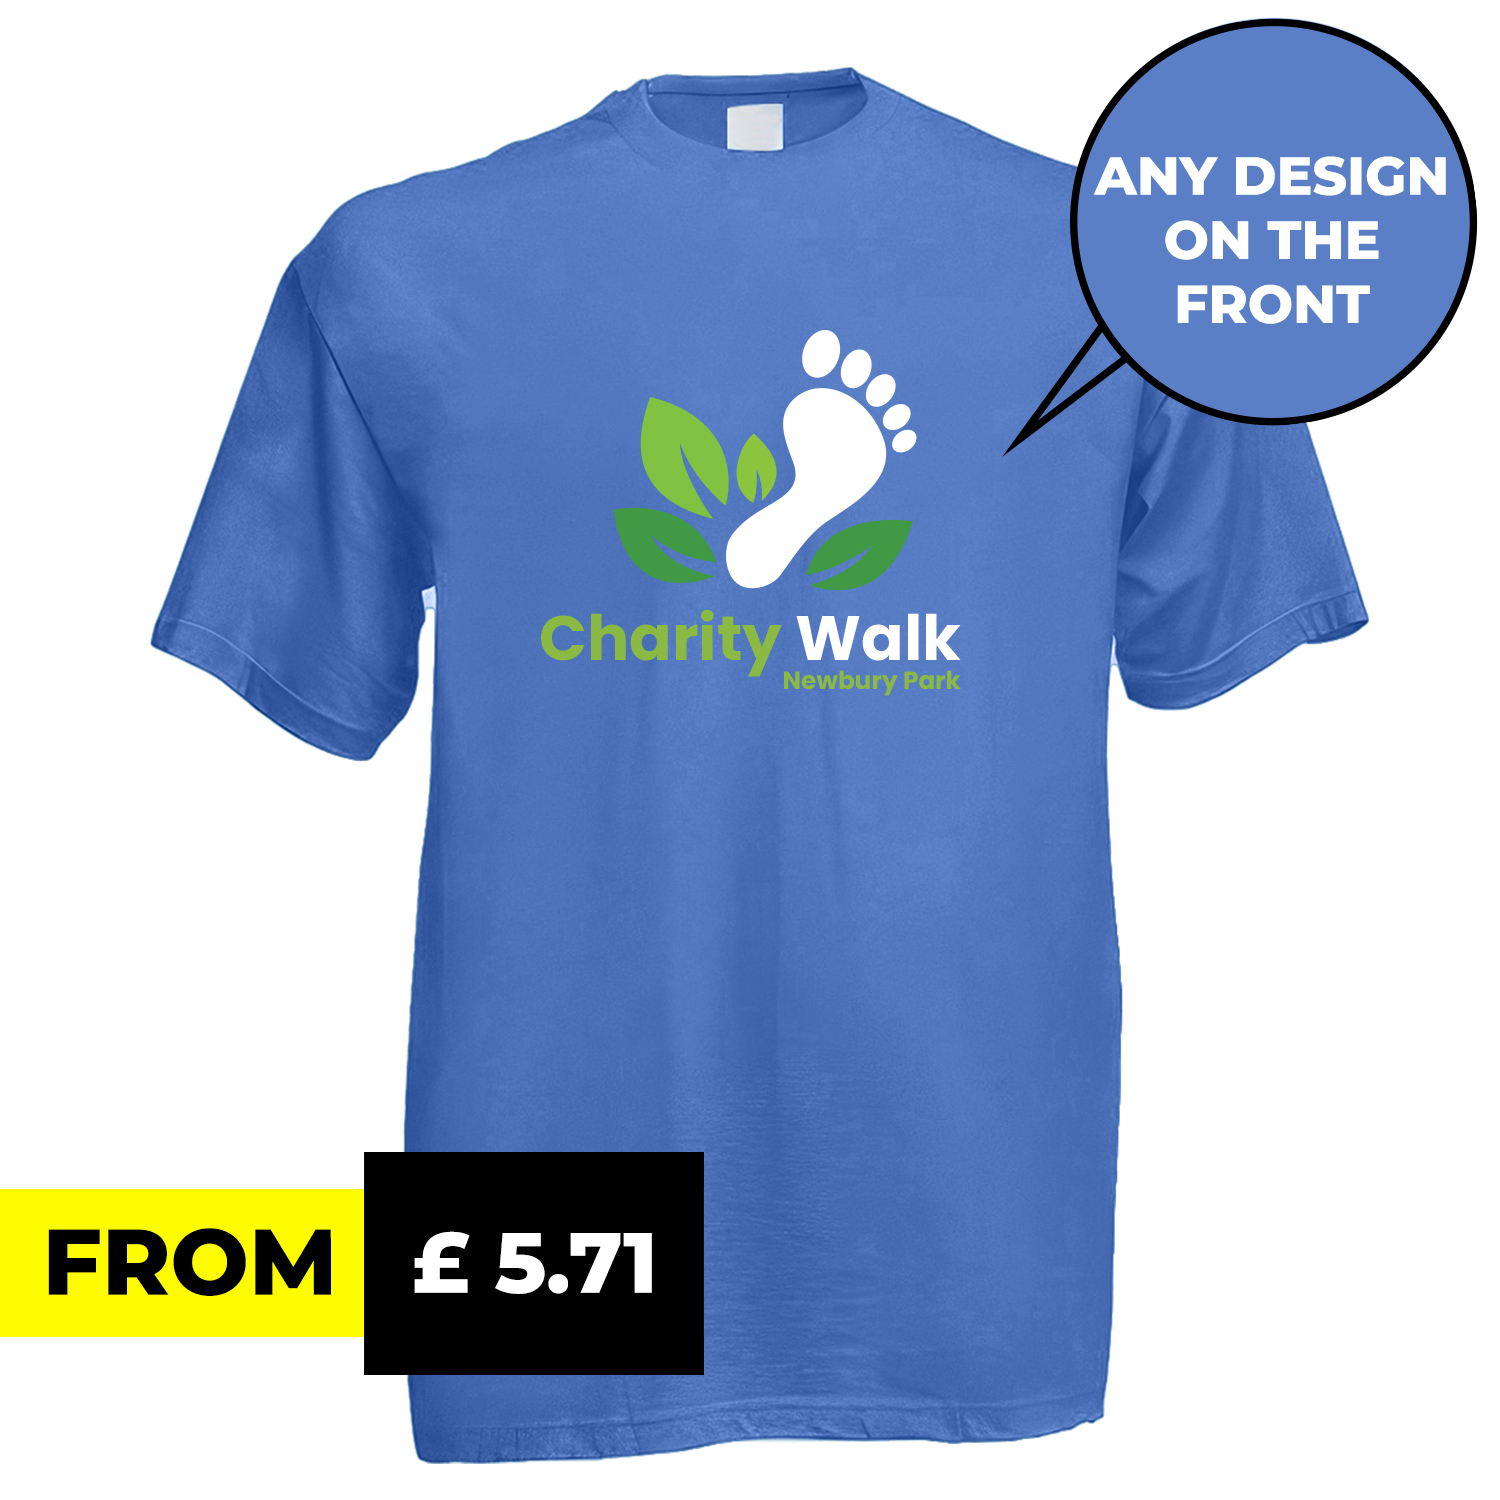 Charity Walk Aids & Welfare Printed Customised T-Shirt Ilford